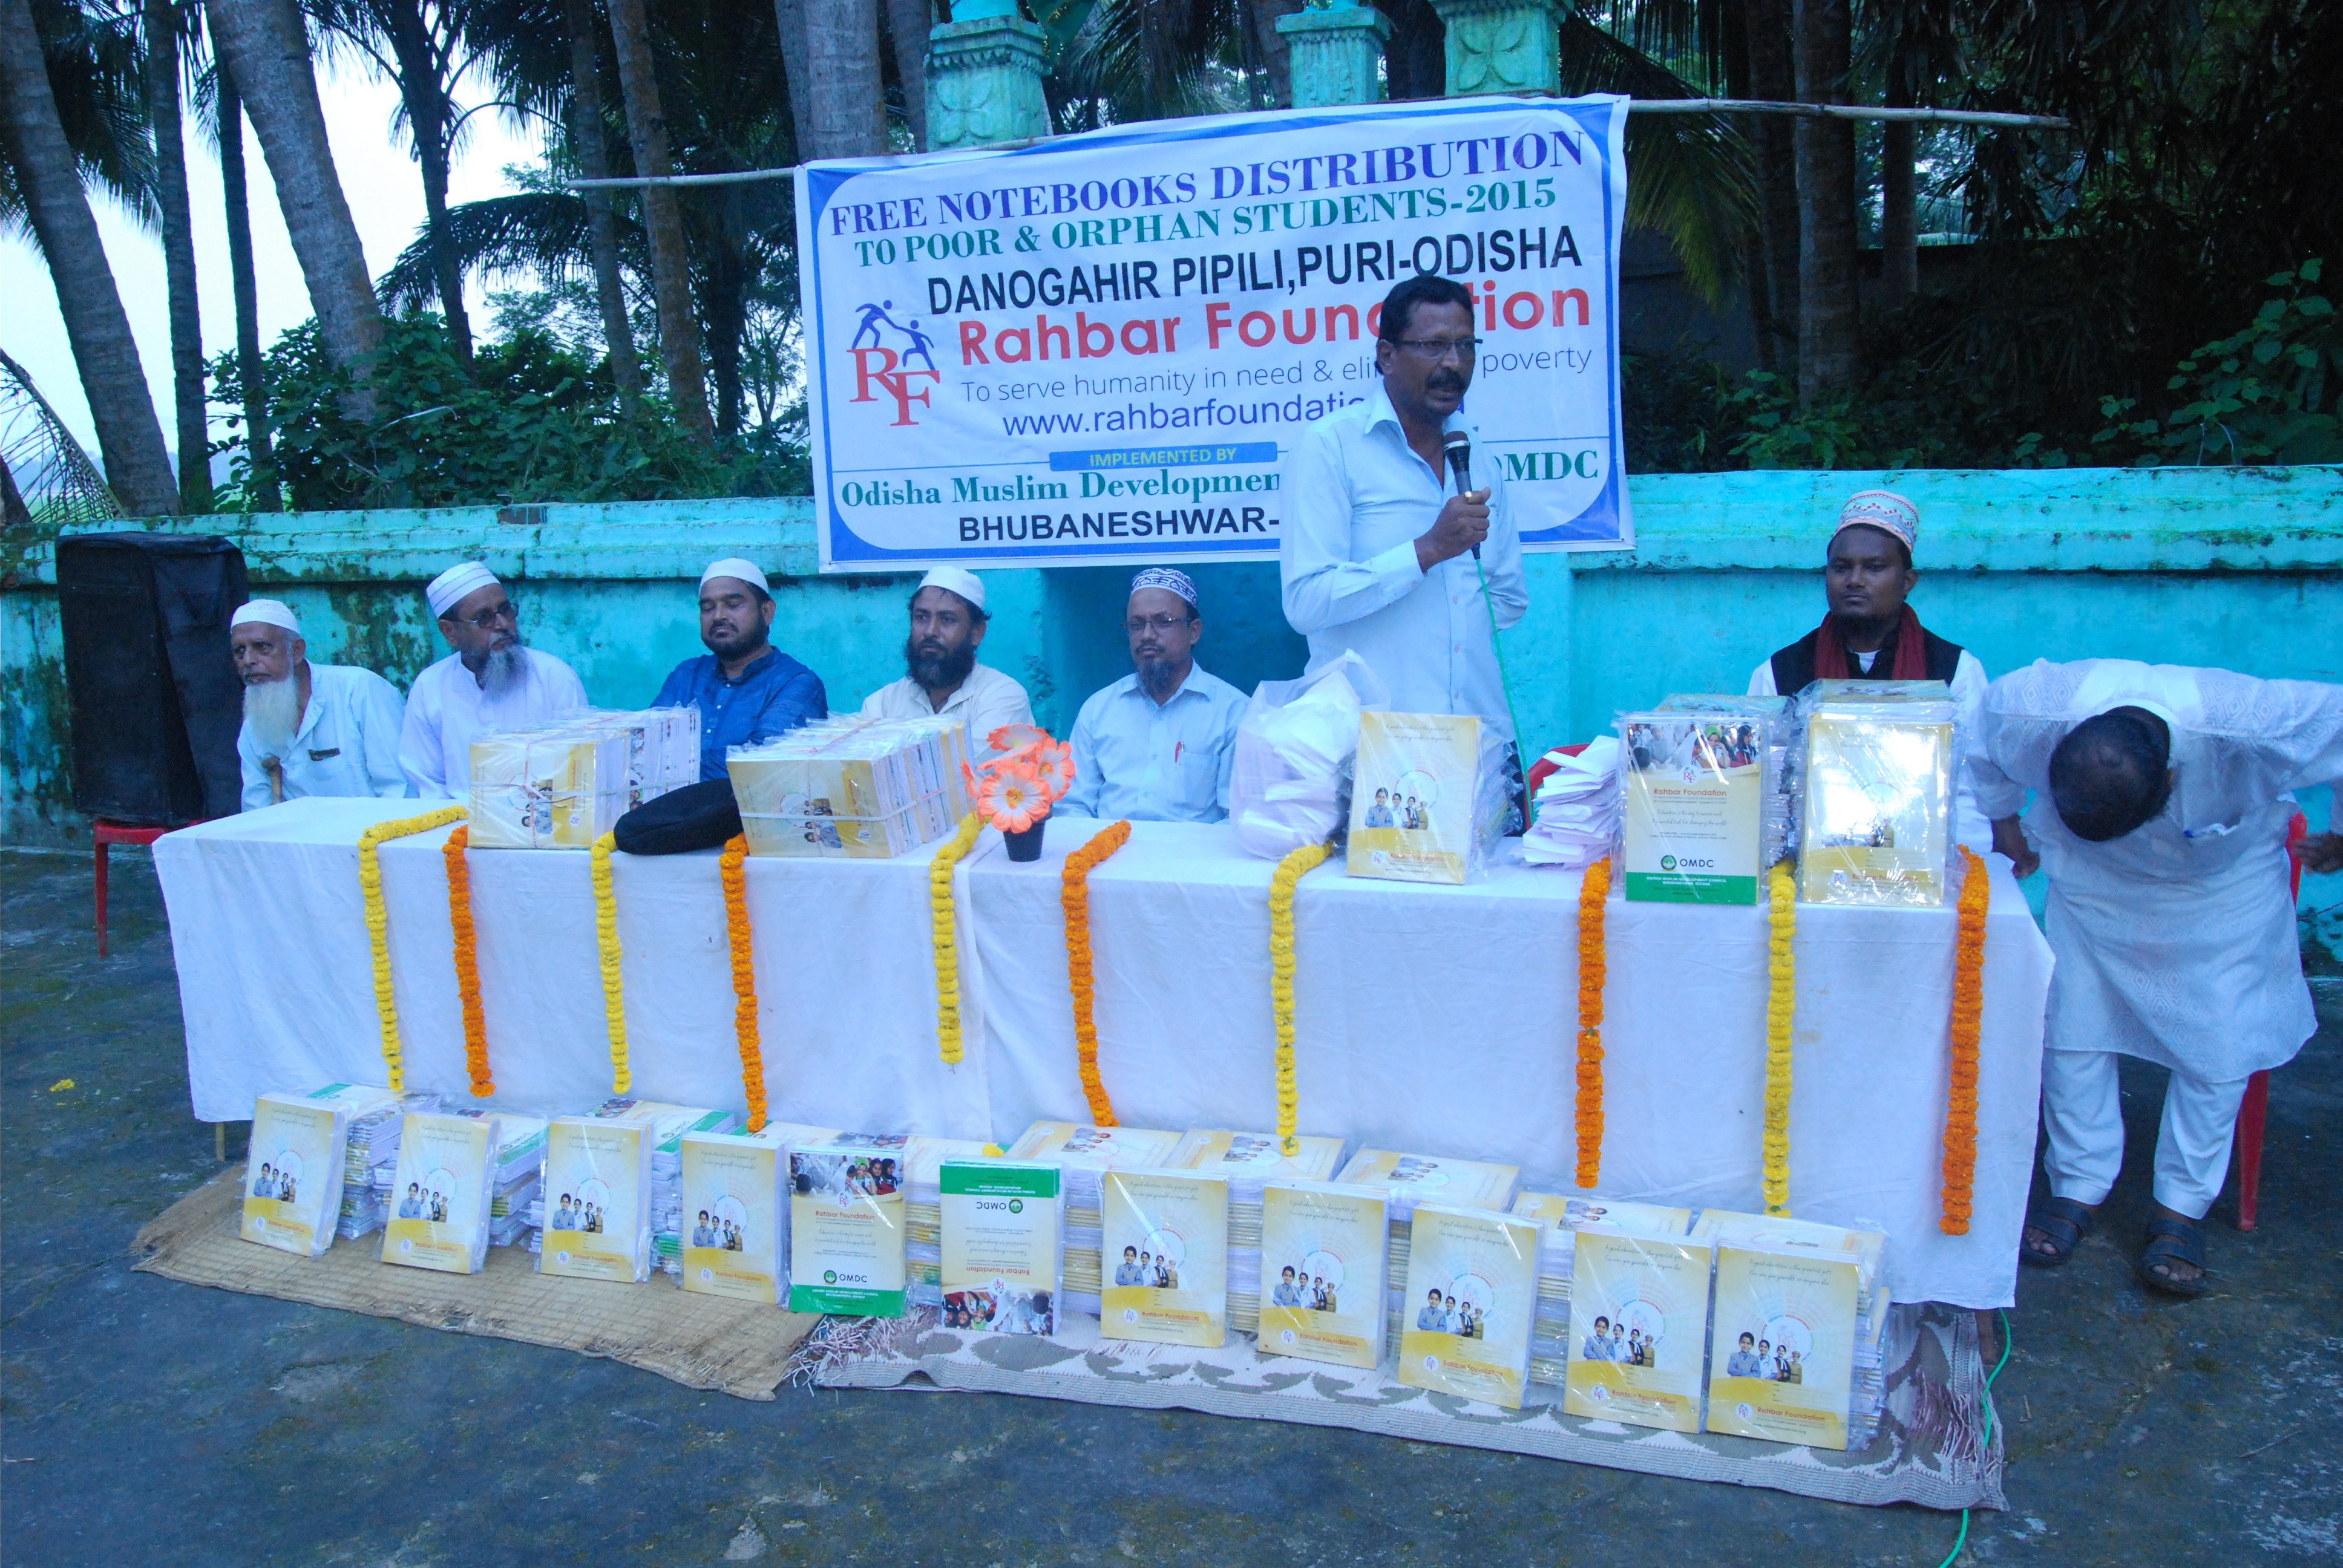 Free Note Books distribution  at Danogahir, Odisha